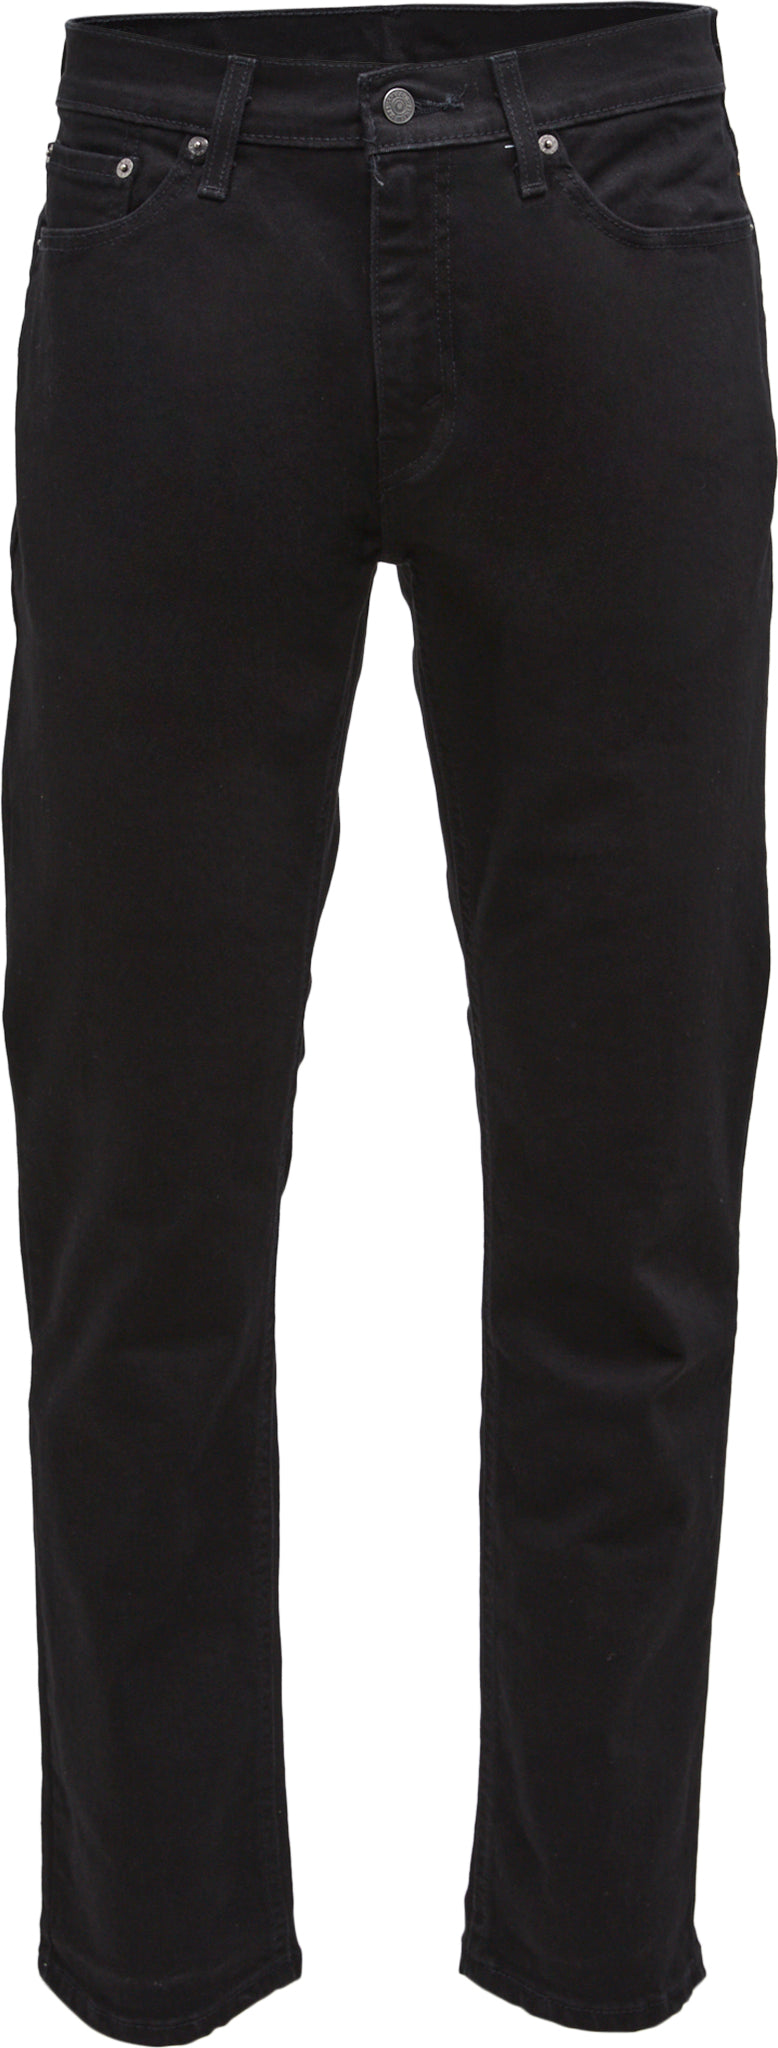 541™ Athletic Taper Fit Men's Jeans - Black